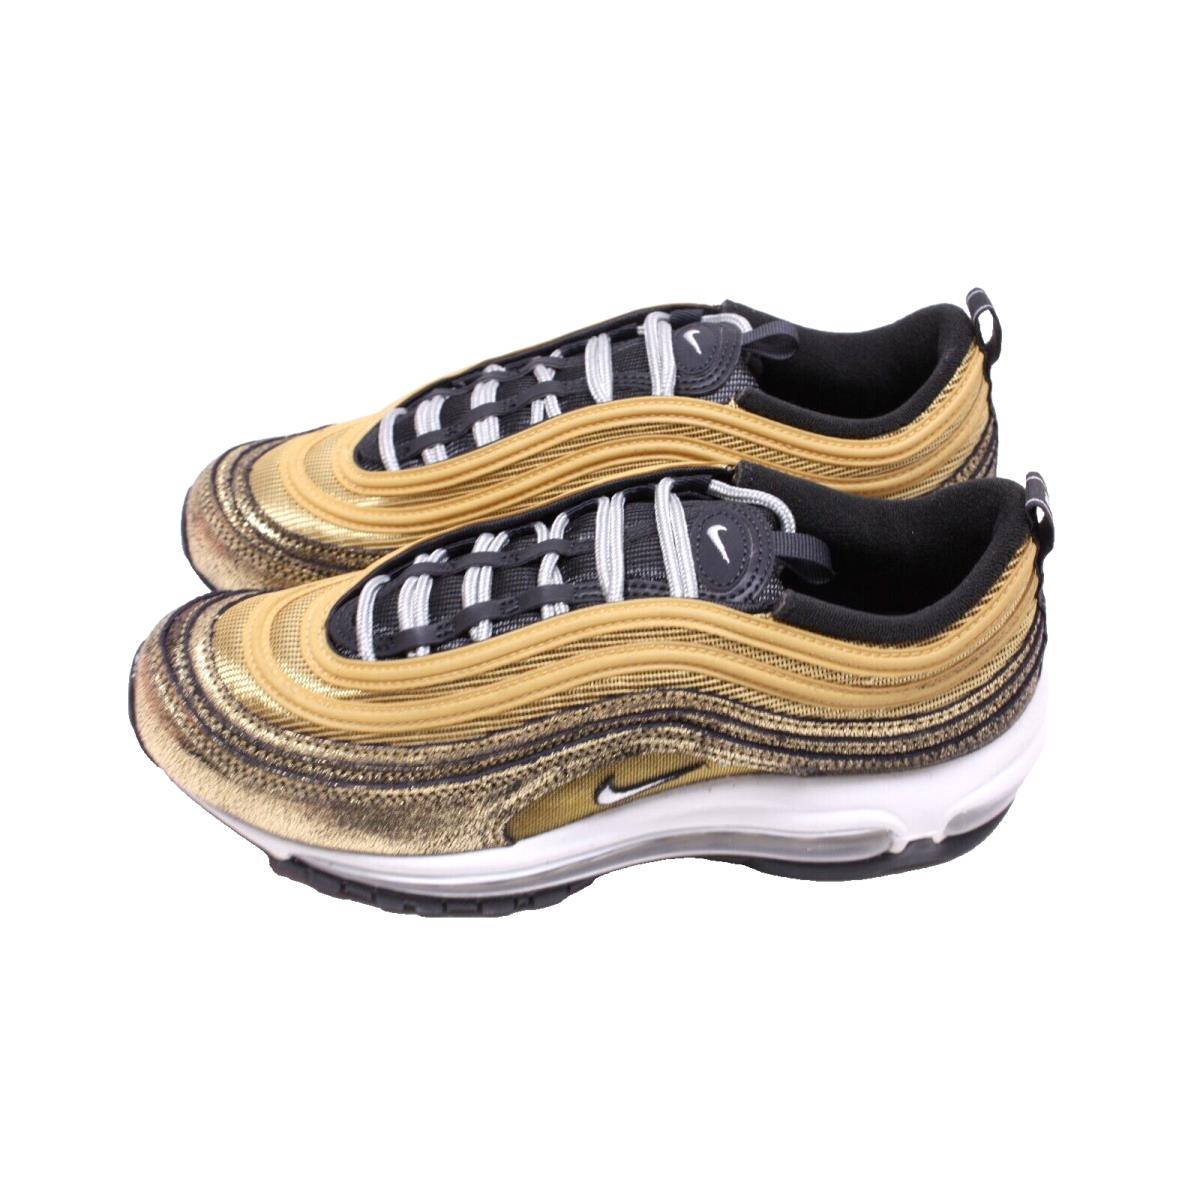 Nike Air Max 97 Women`s Shoes Size 8.5 DO5881 700 - Twine/Metallic Gold/Off Noir/White